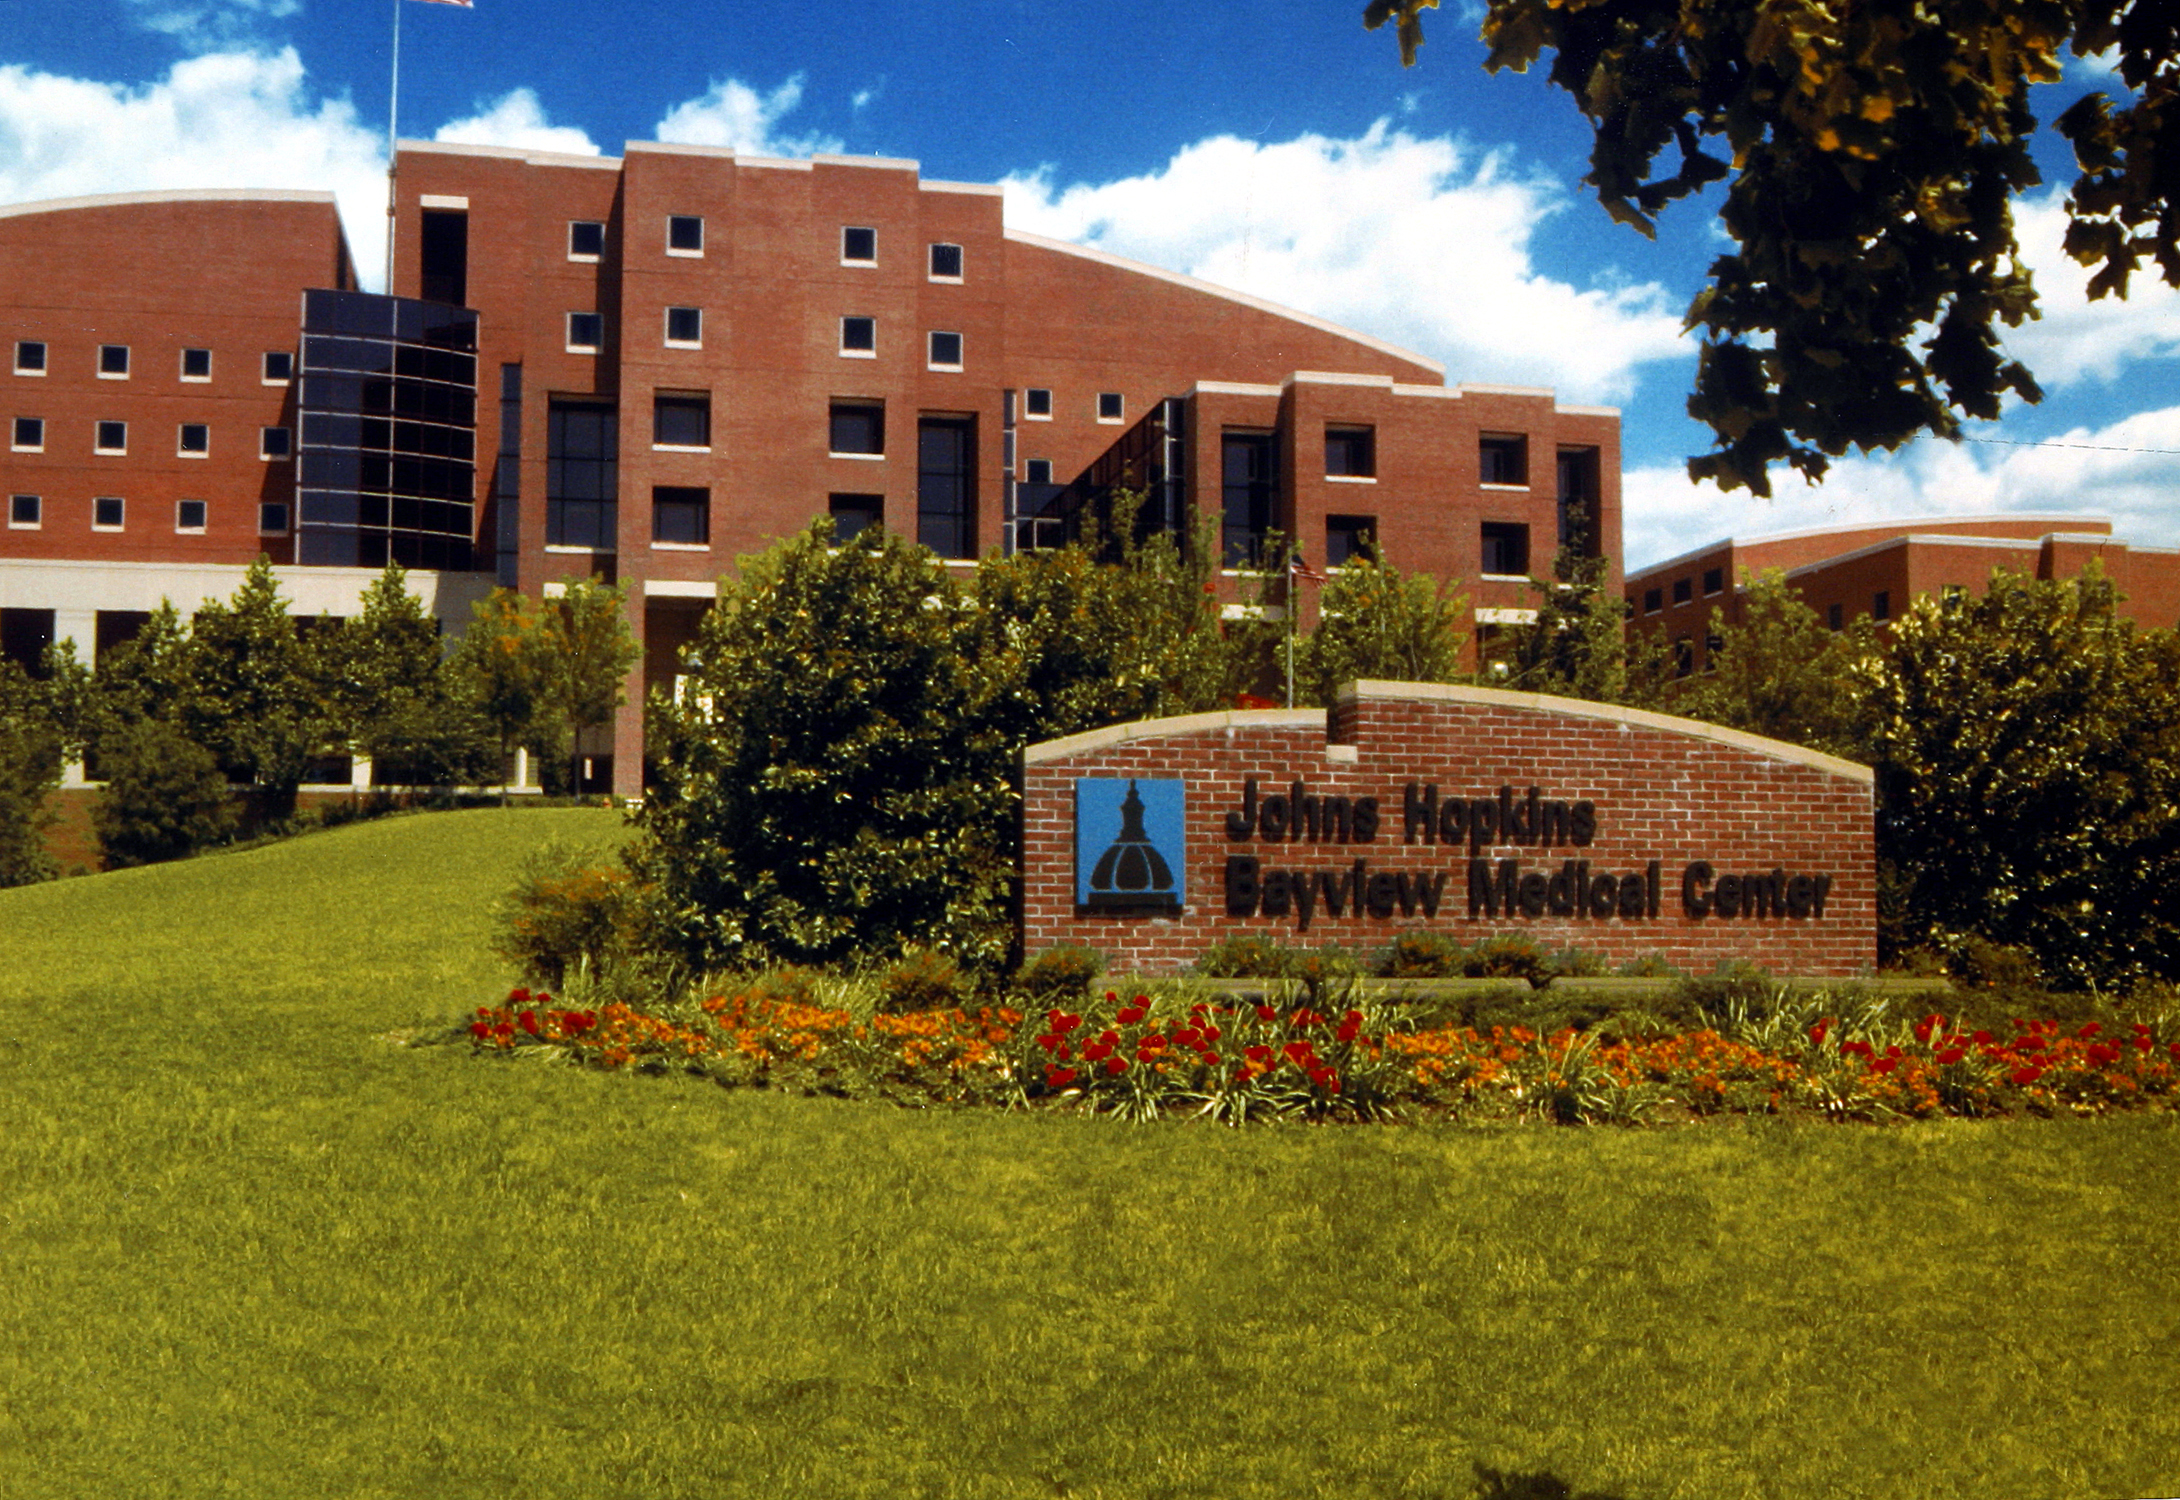 Johns hopkins hospital bayview jobs